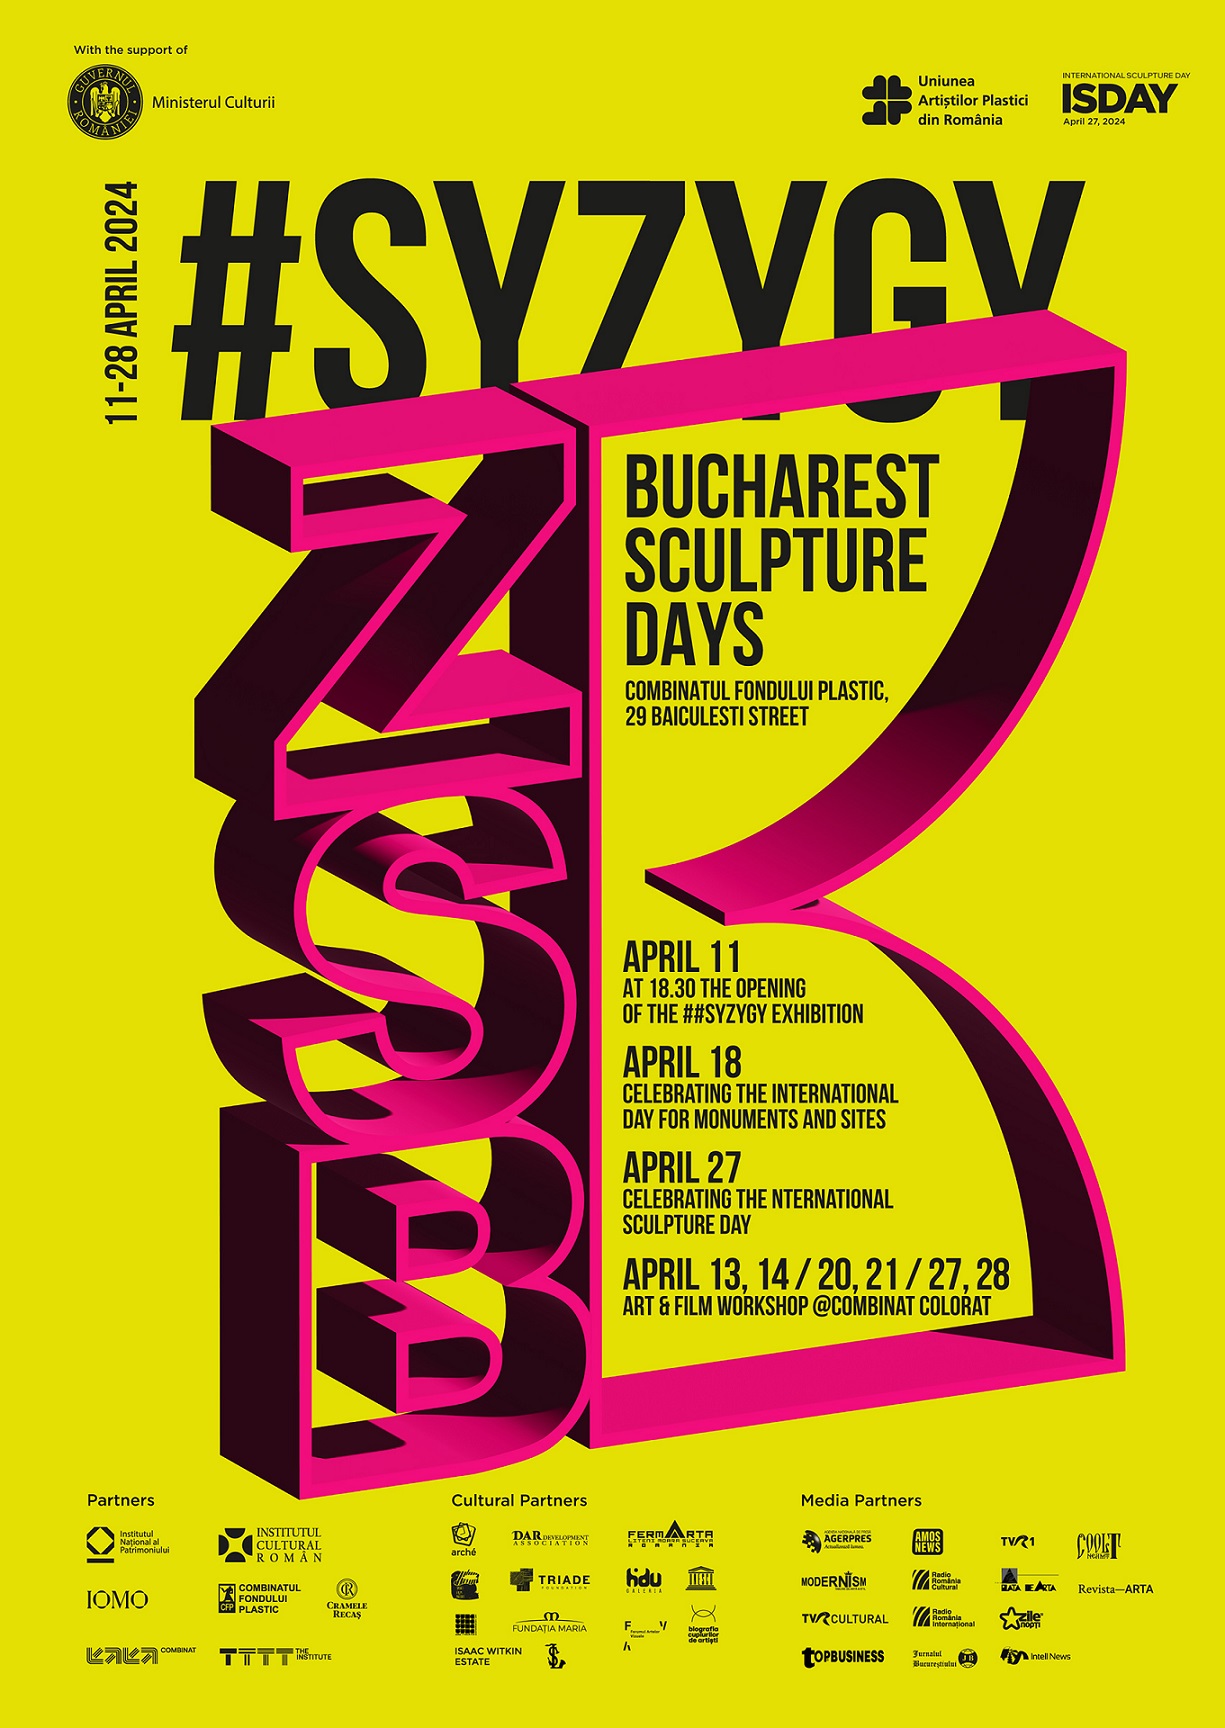 Bucharest Sculpture Days kick off with exhibitions, workshops